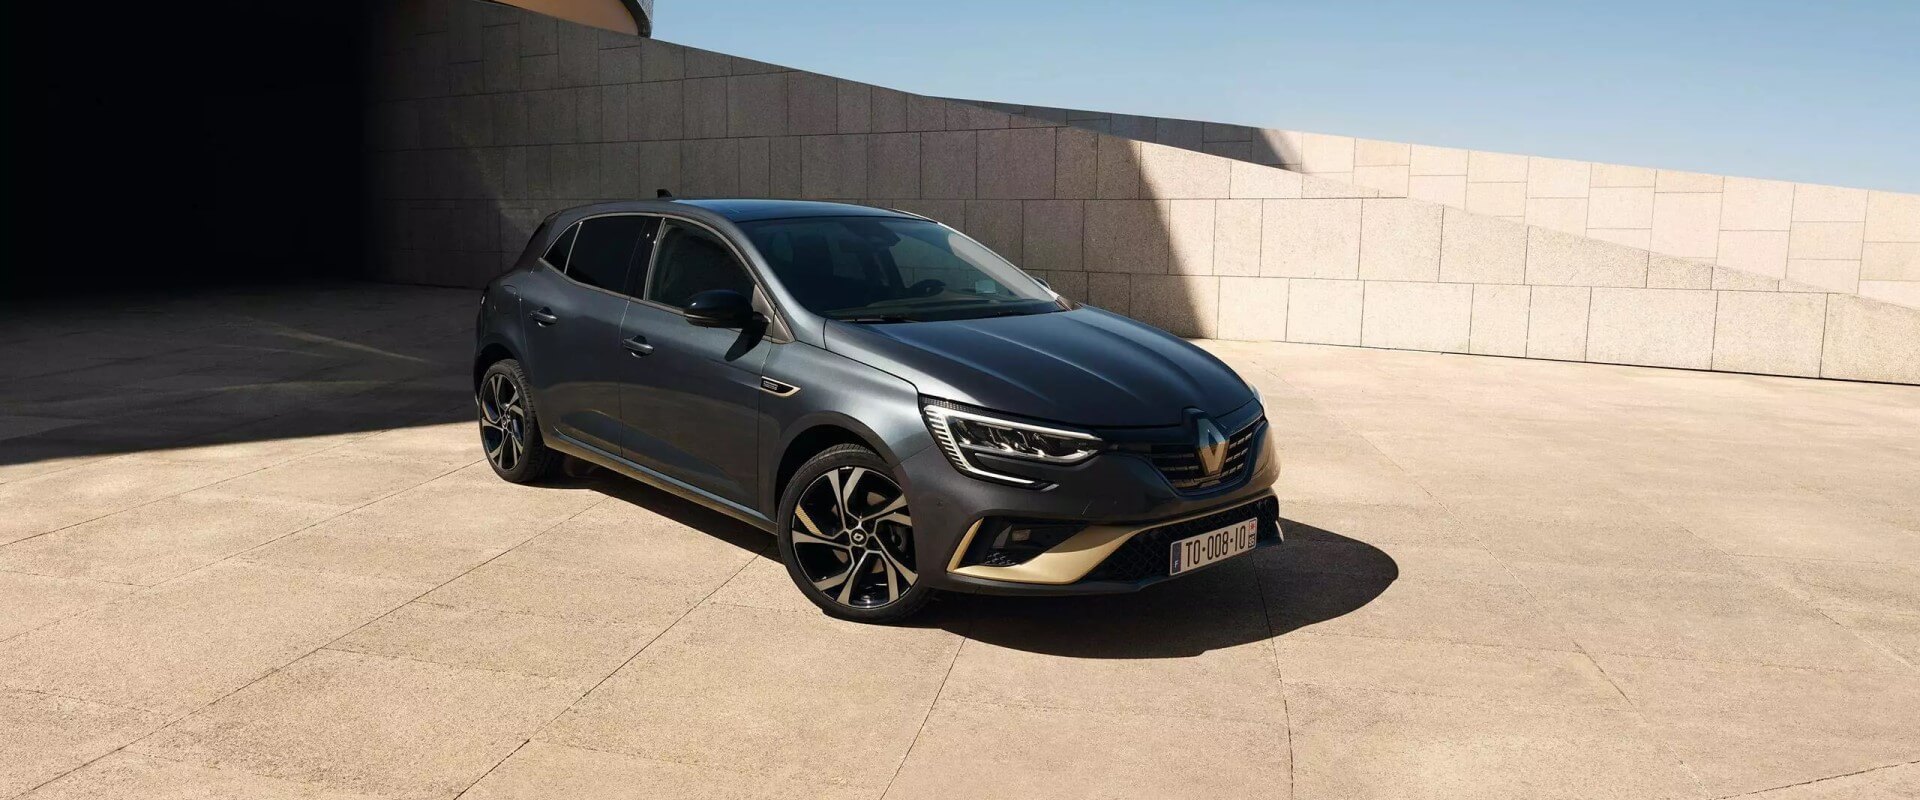 Renault Megane: diesel, gasolina e e-tech (elétrico e plug-in)